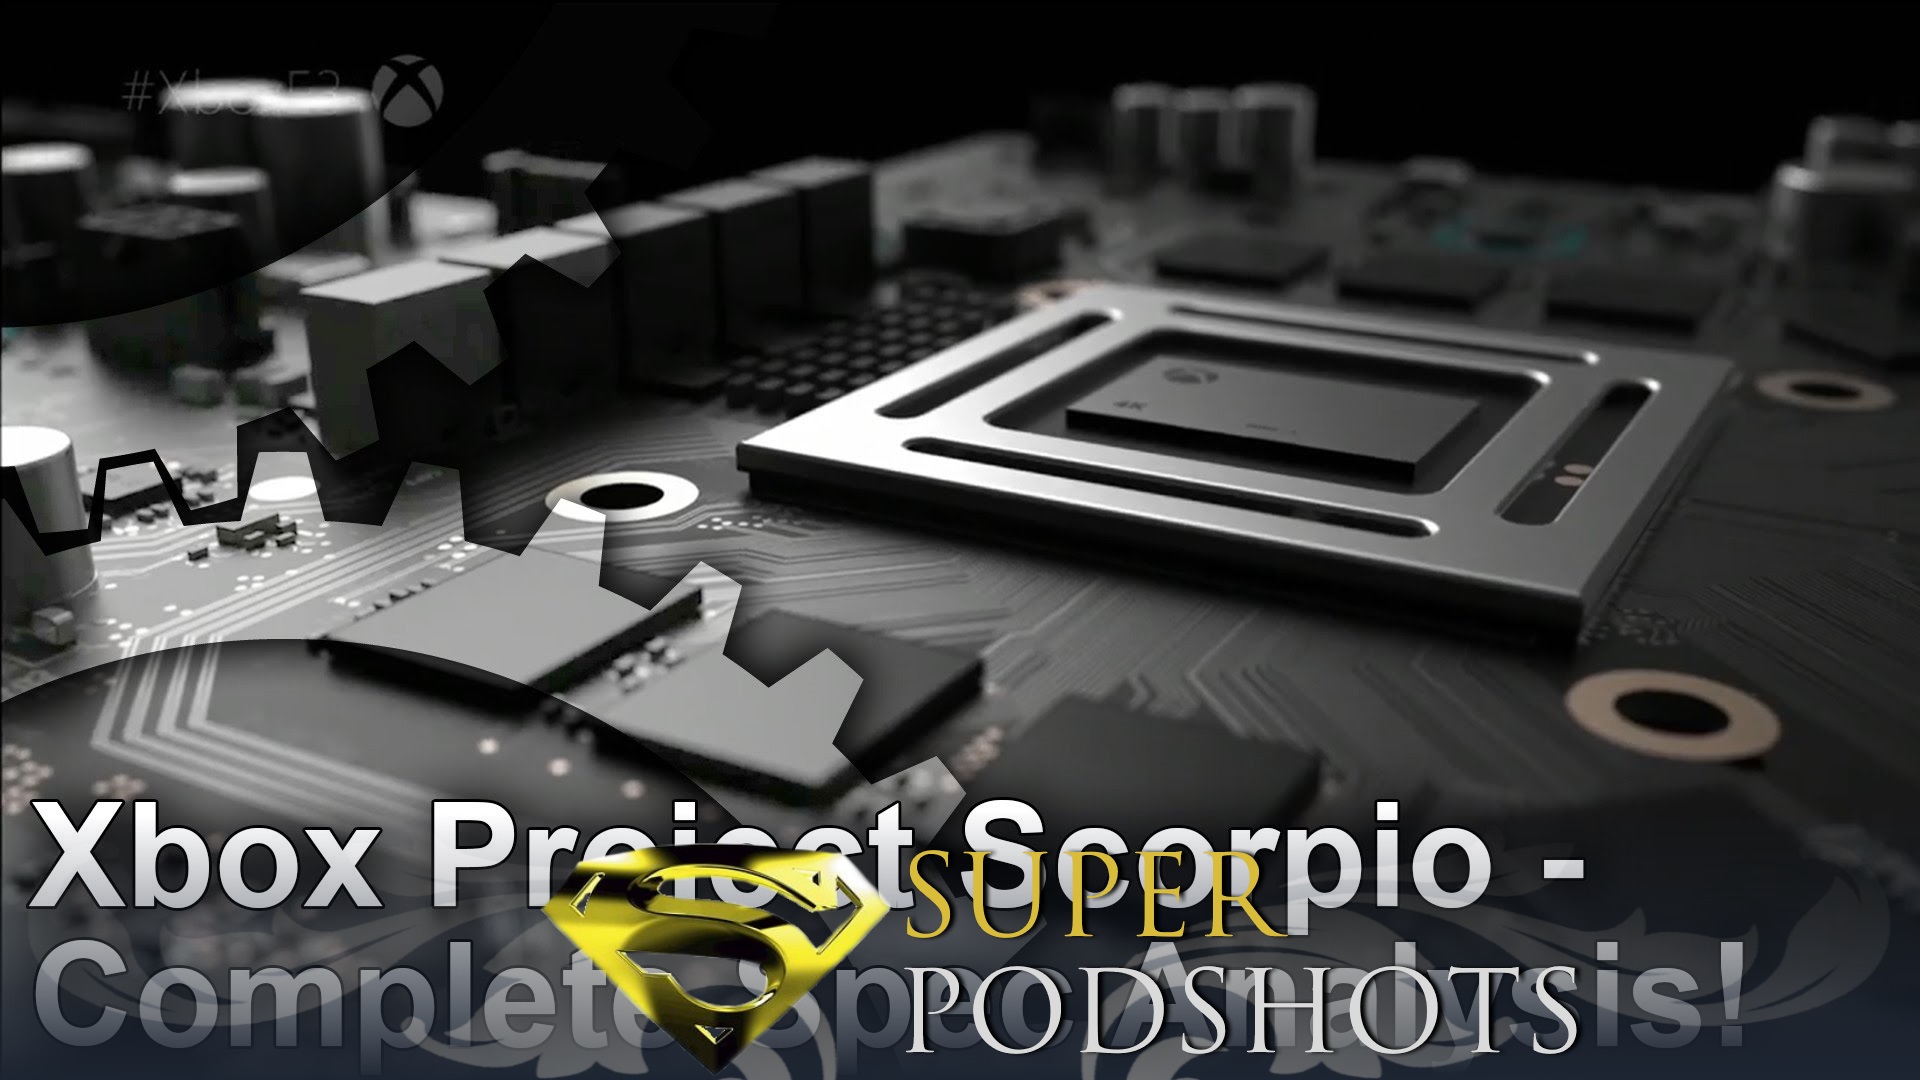 Super Podshots Ep. 65 - Digital Foundry, Scorpio, Sea of Thieves & E3 2017